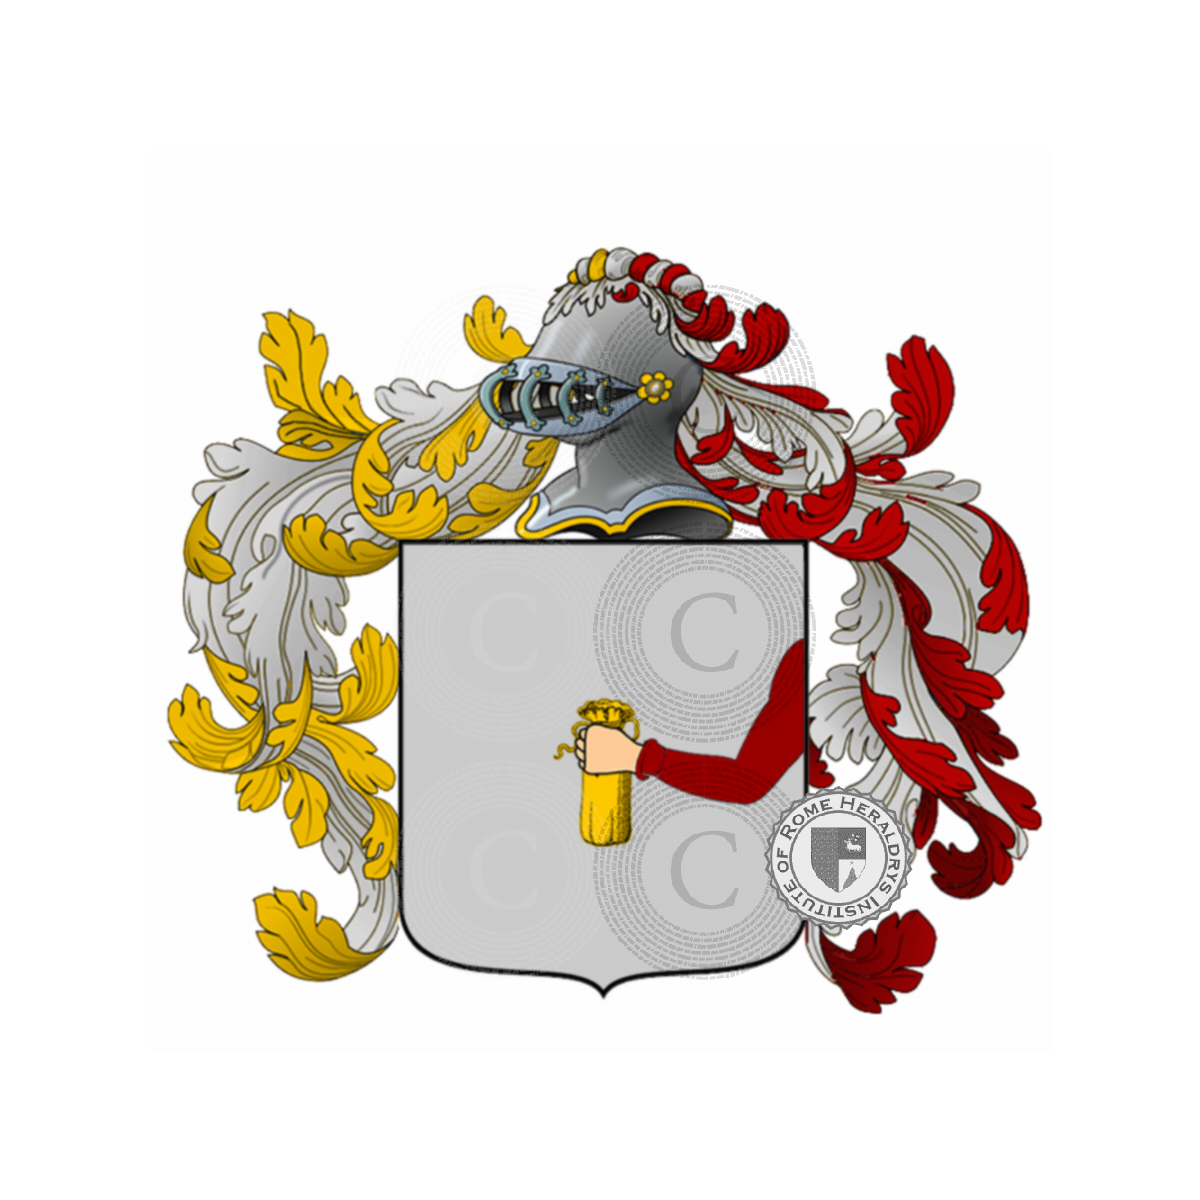 Coat of arms of familysaccati